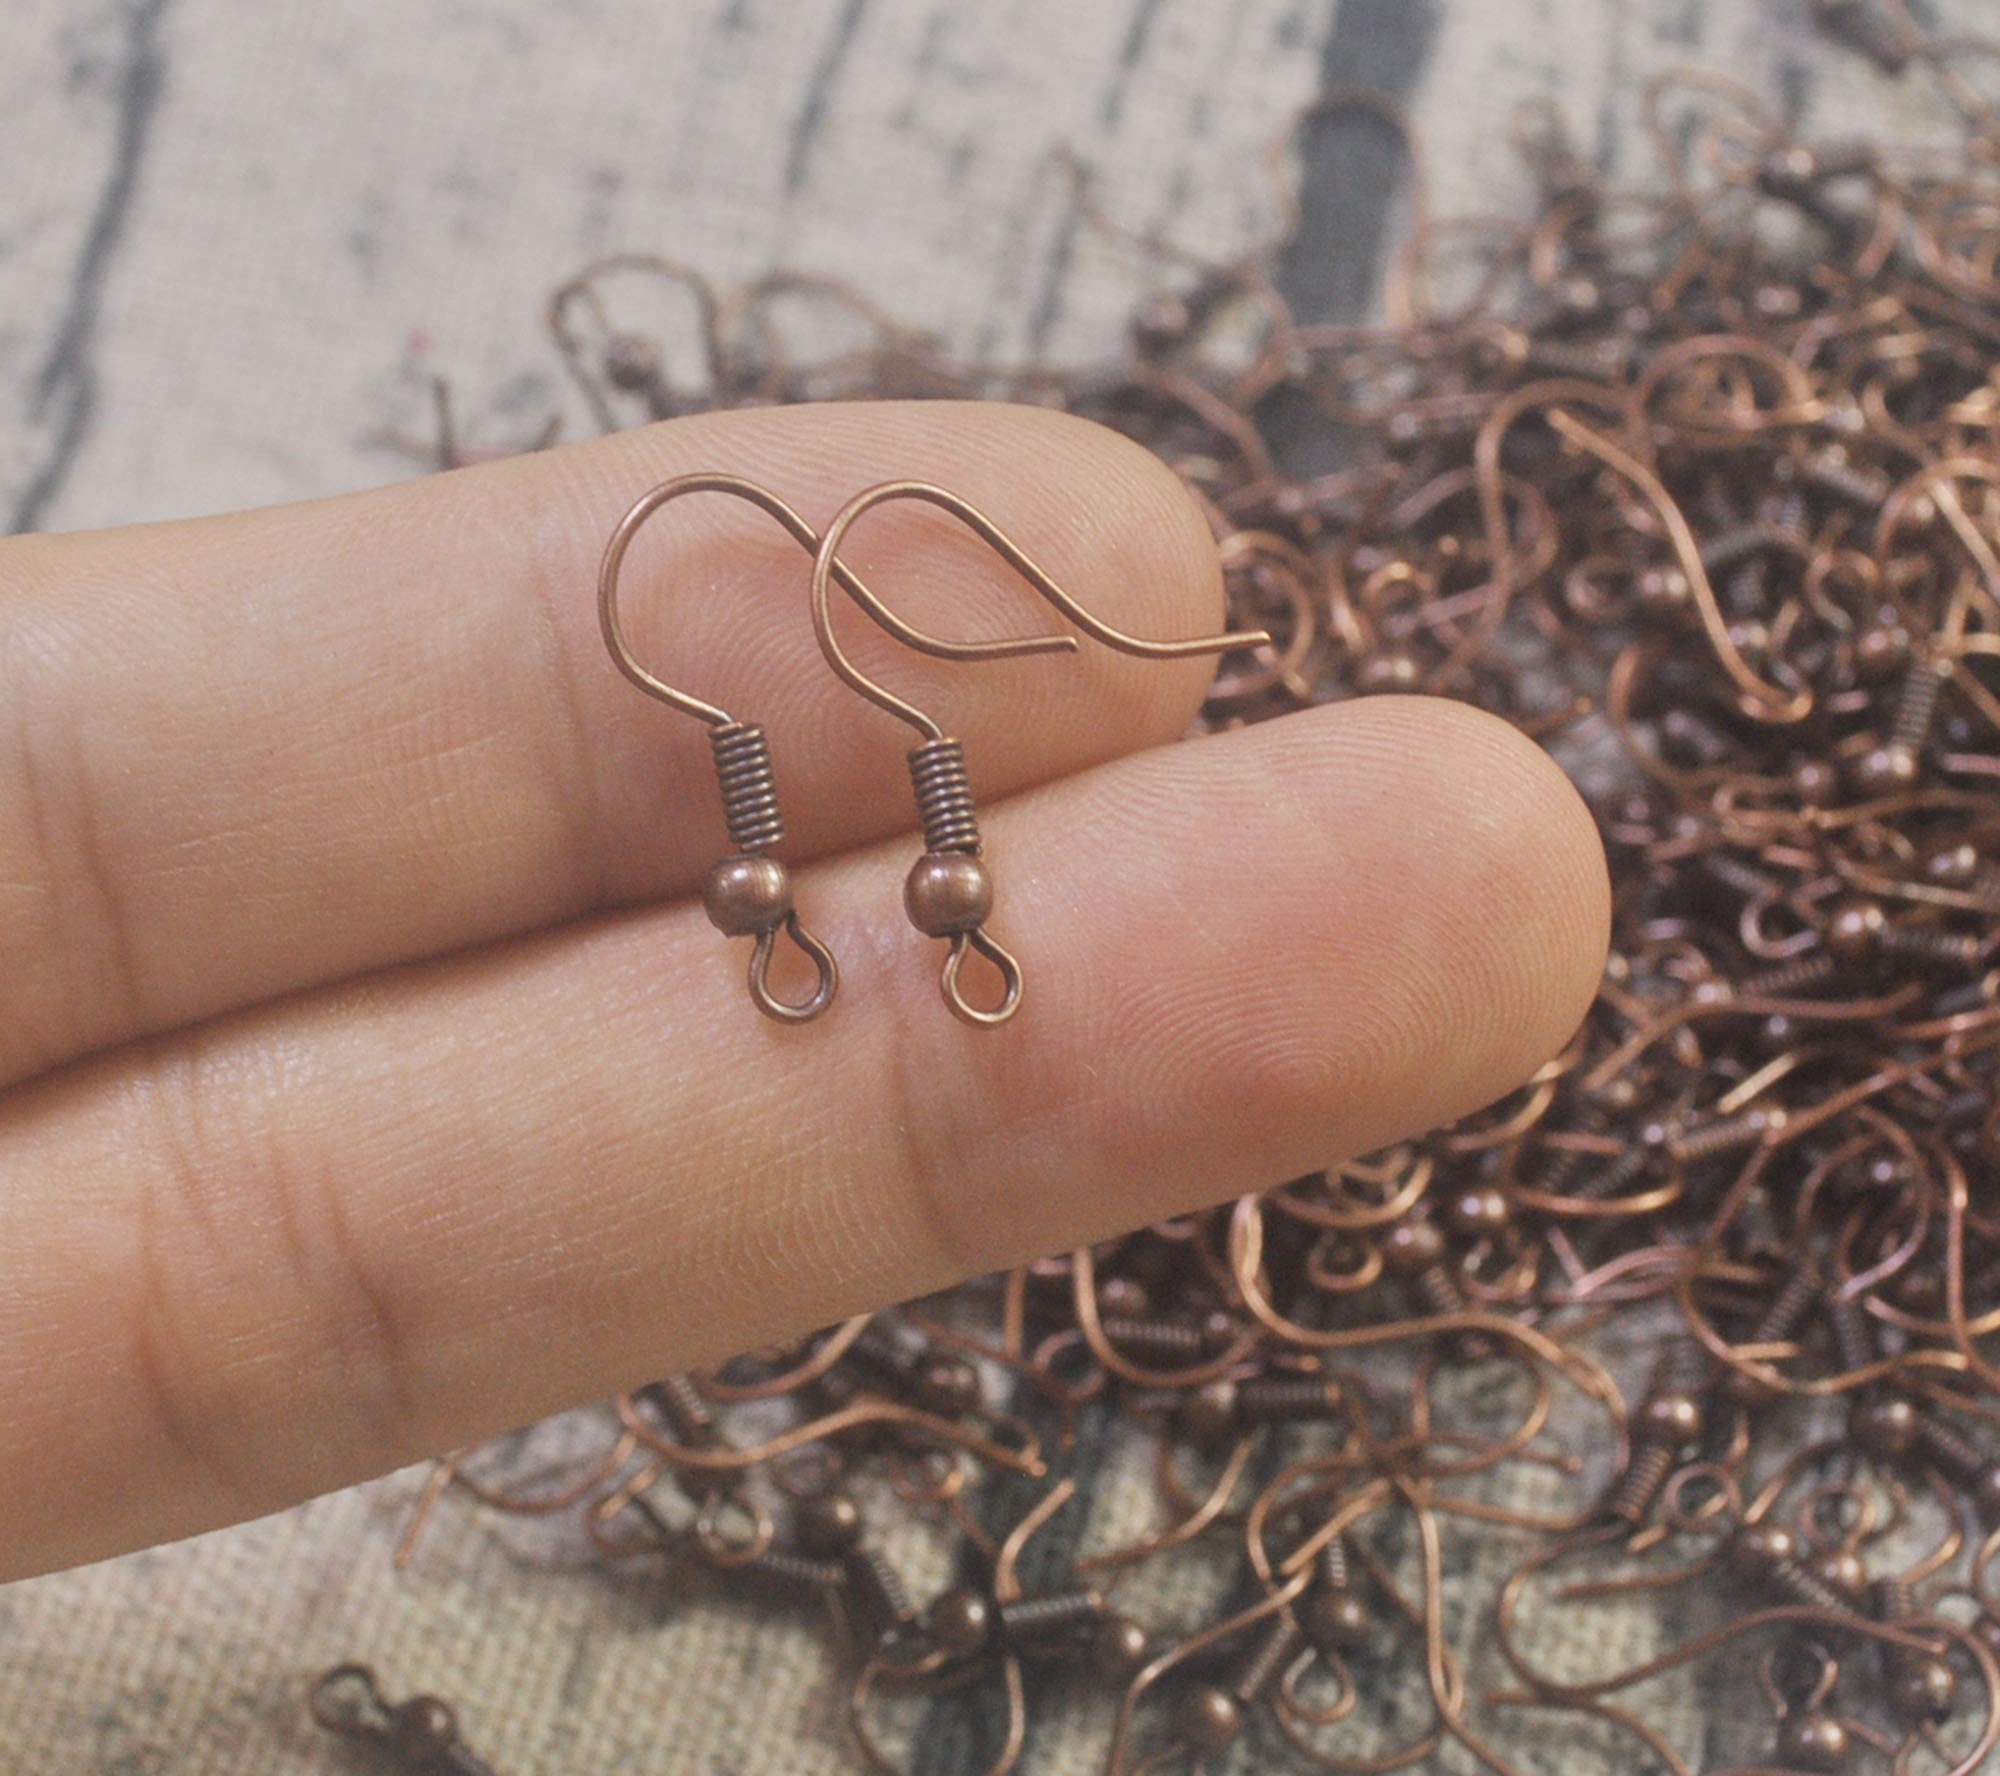 50,100,150,200Pcs Antique Copper Earring hooks, Earwires Fish Hook  Jewellery Findings--Nickel free, lead free and cadmium free earwire